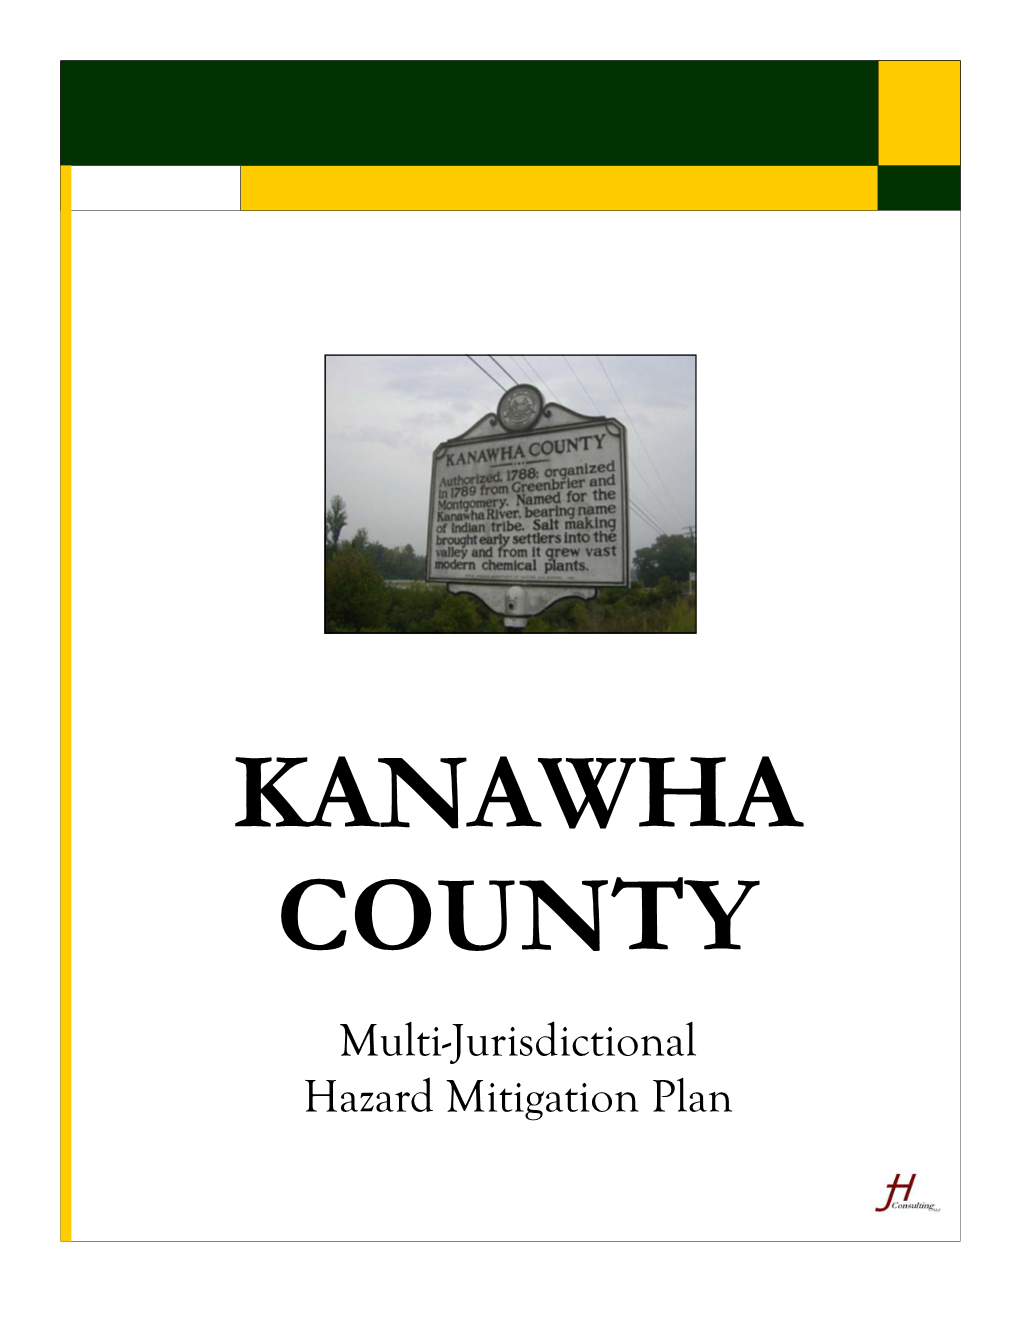 KANAWHA COUNTY Multi-Jurisdictional Hazard Mitigation Plan